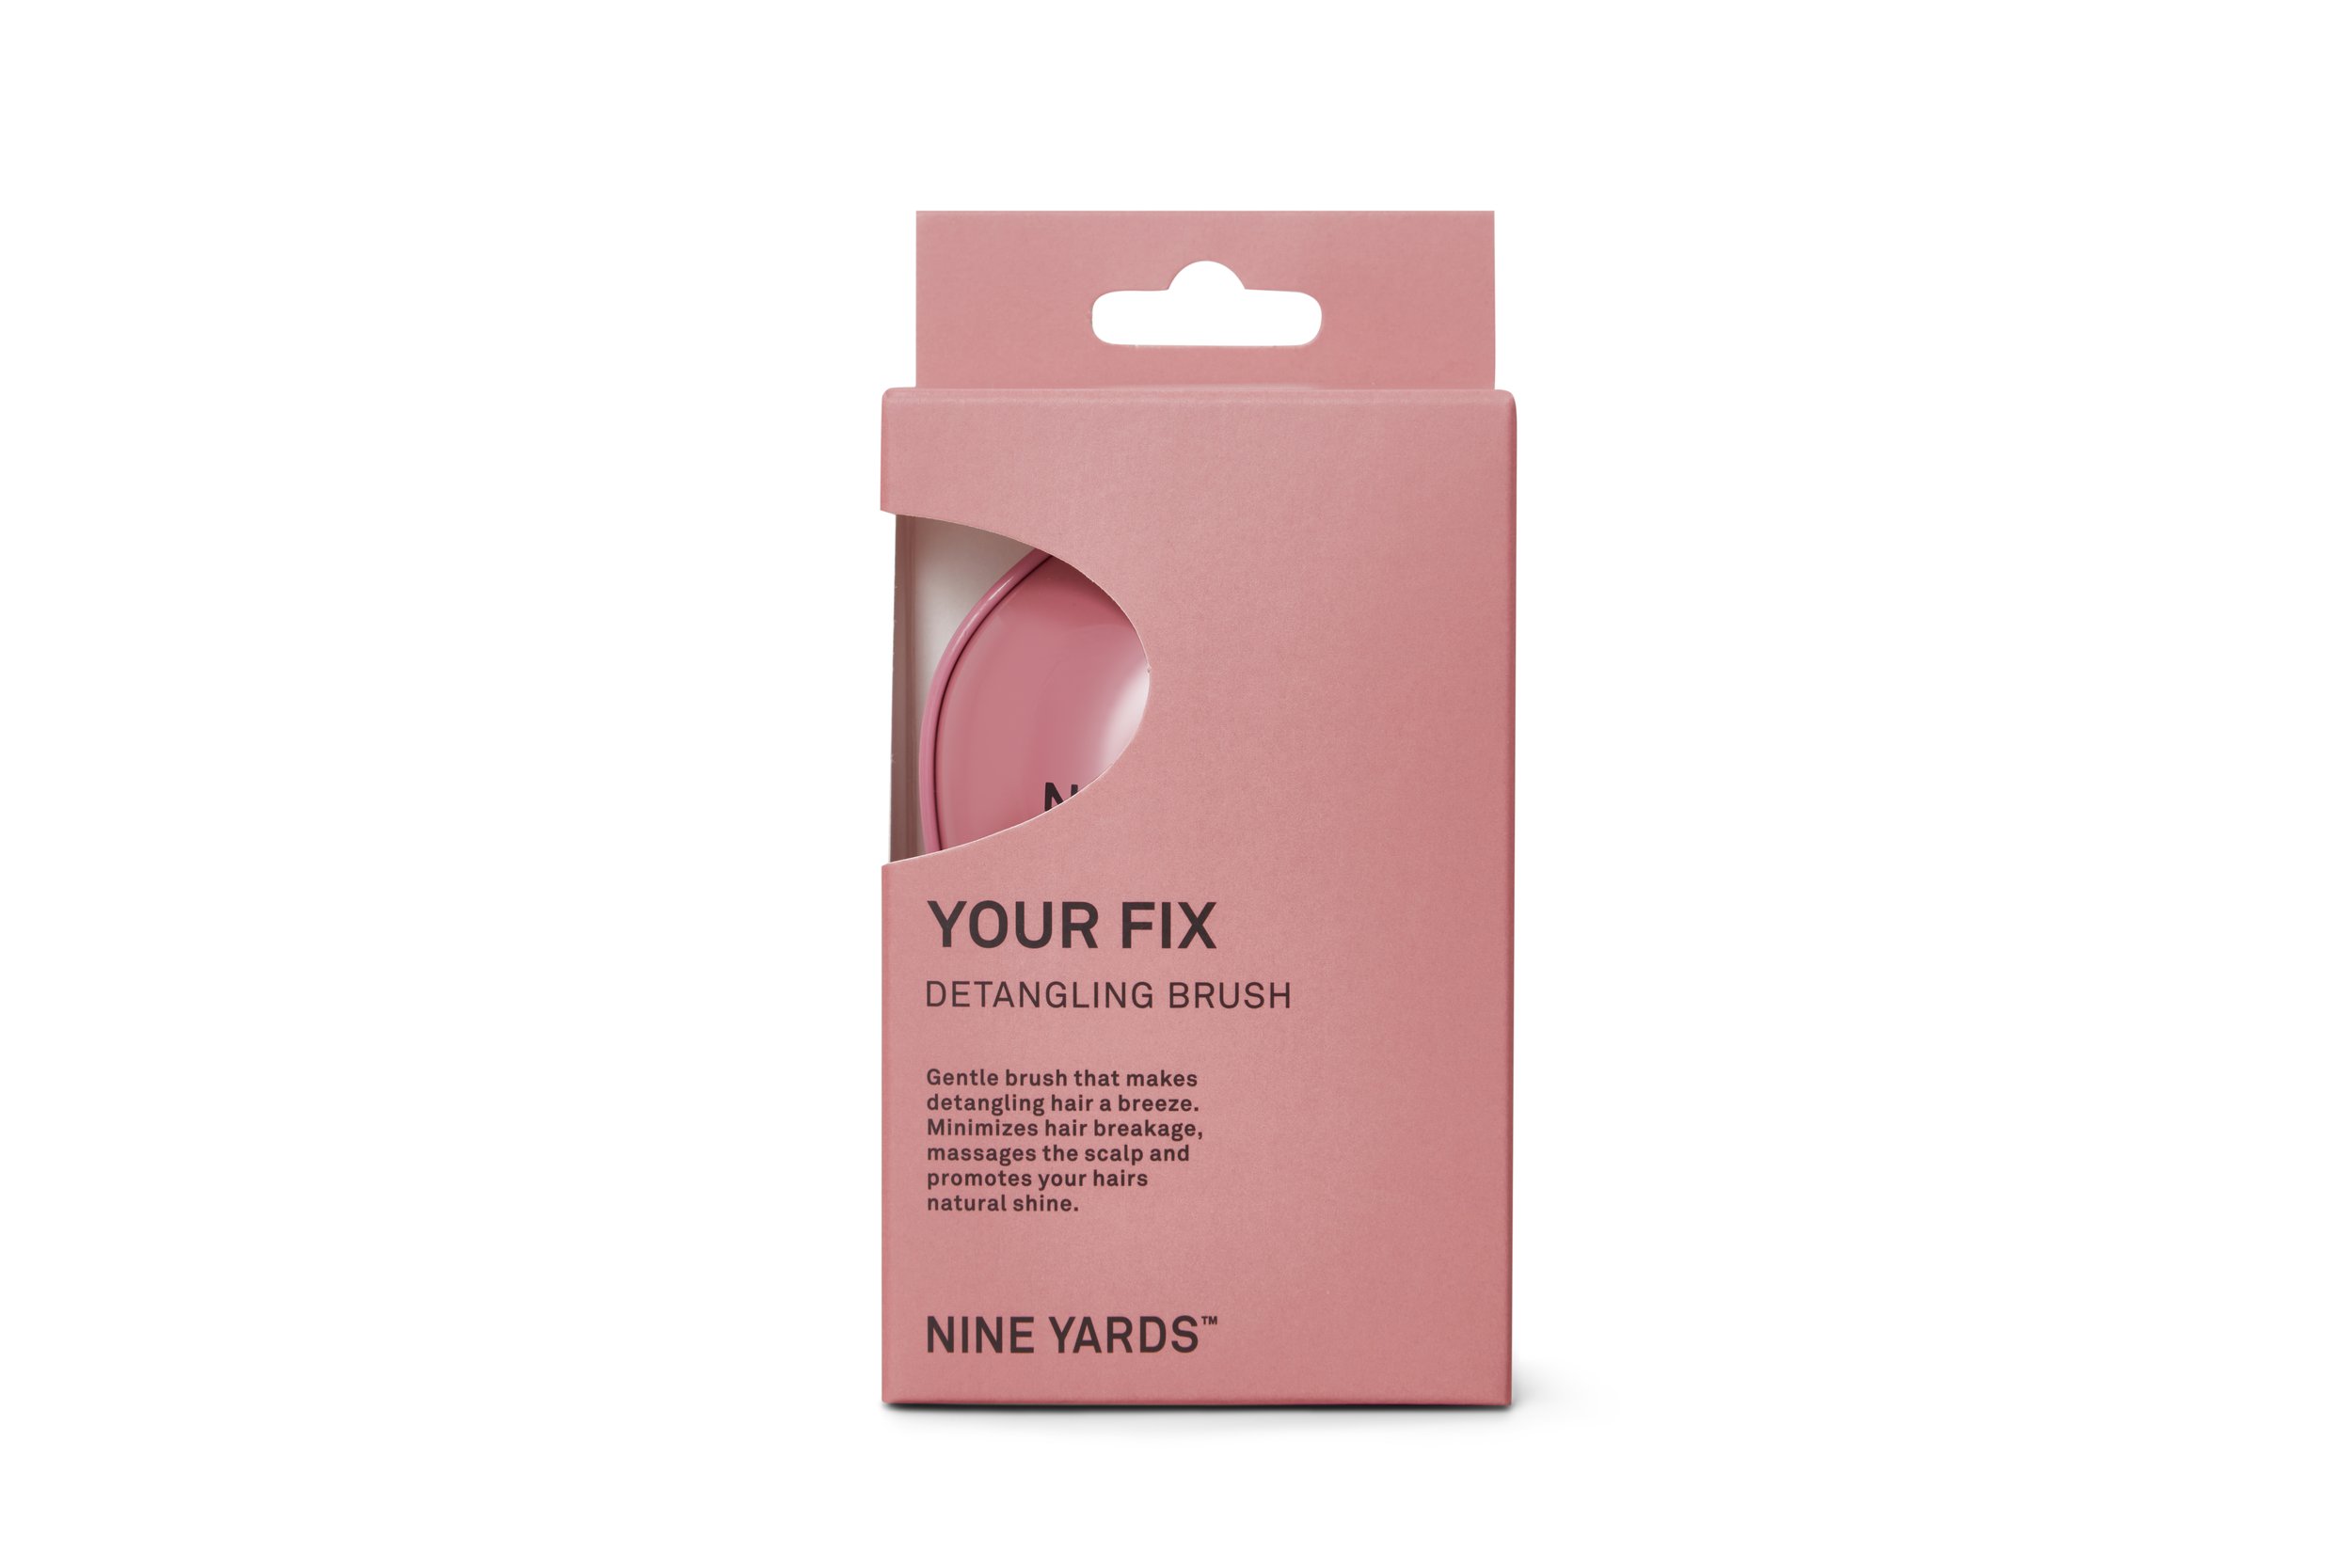 Your Fix Detangling Brush - Packaging.jpg